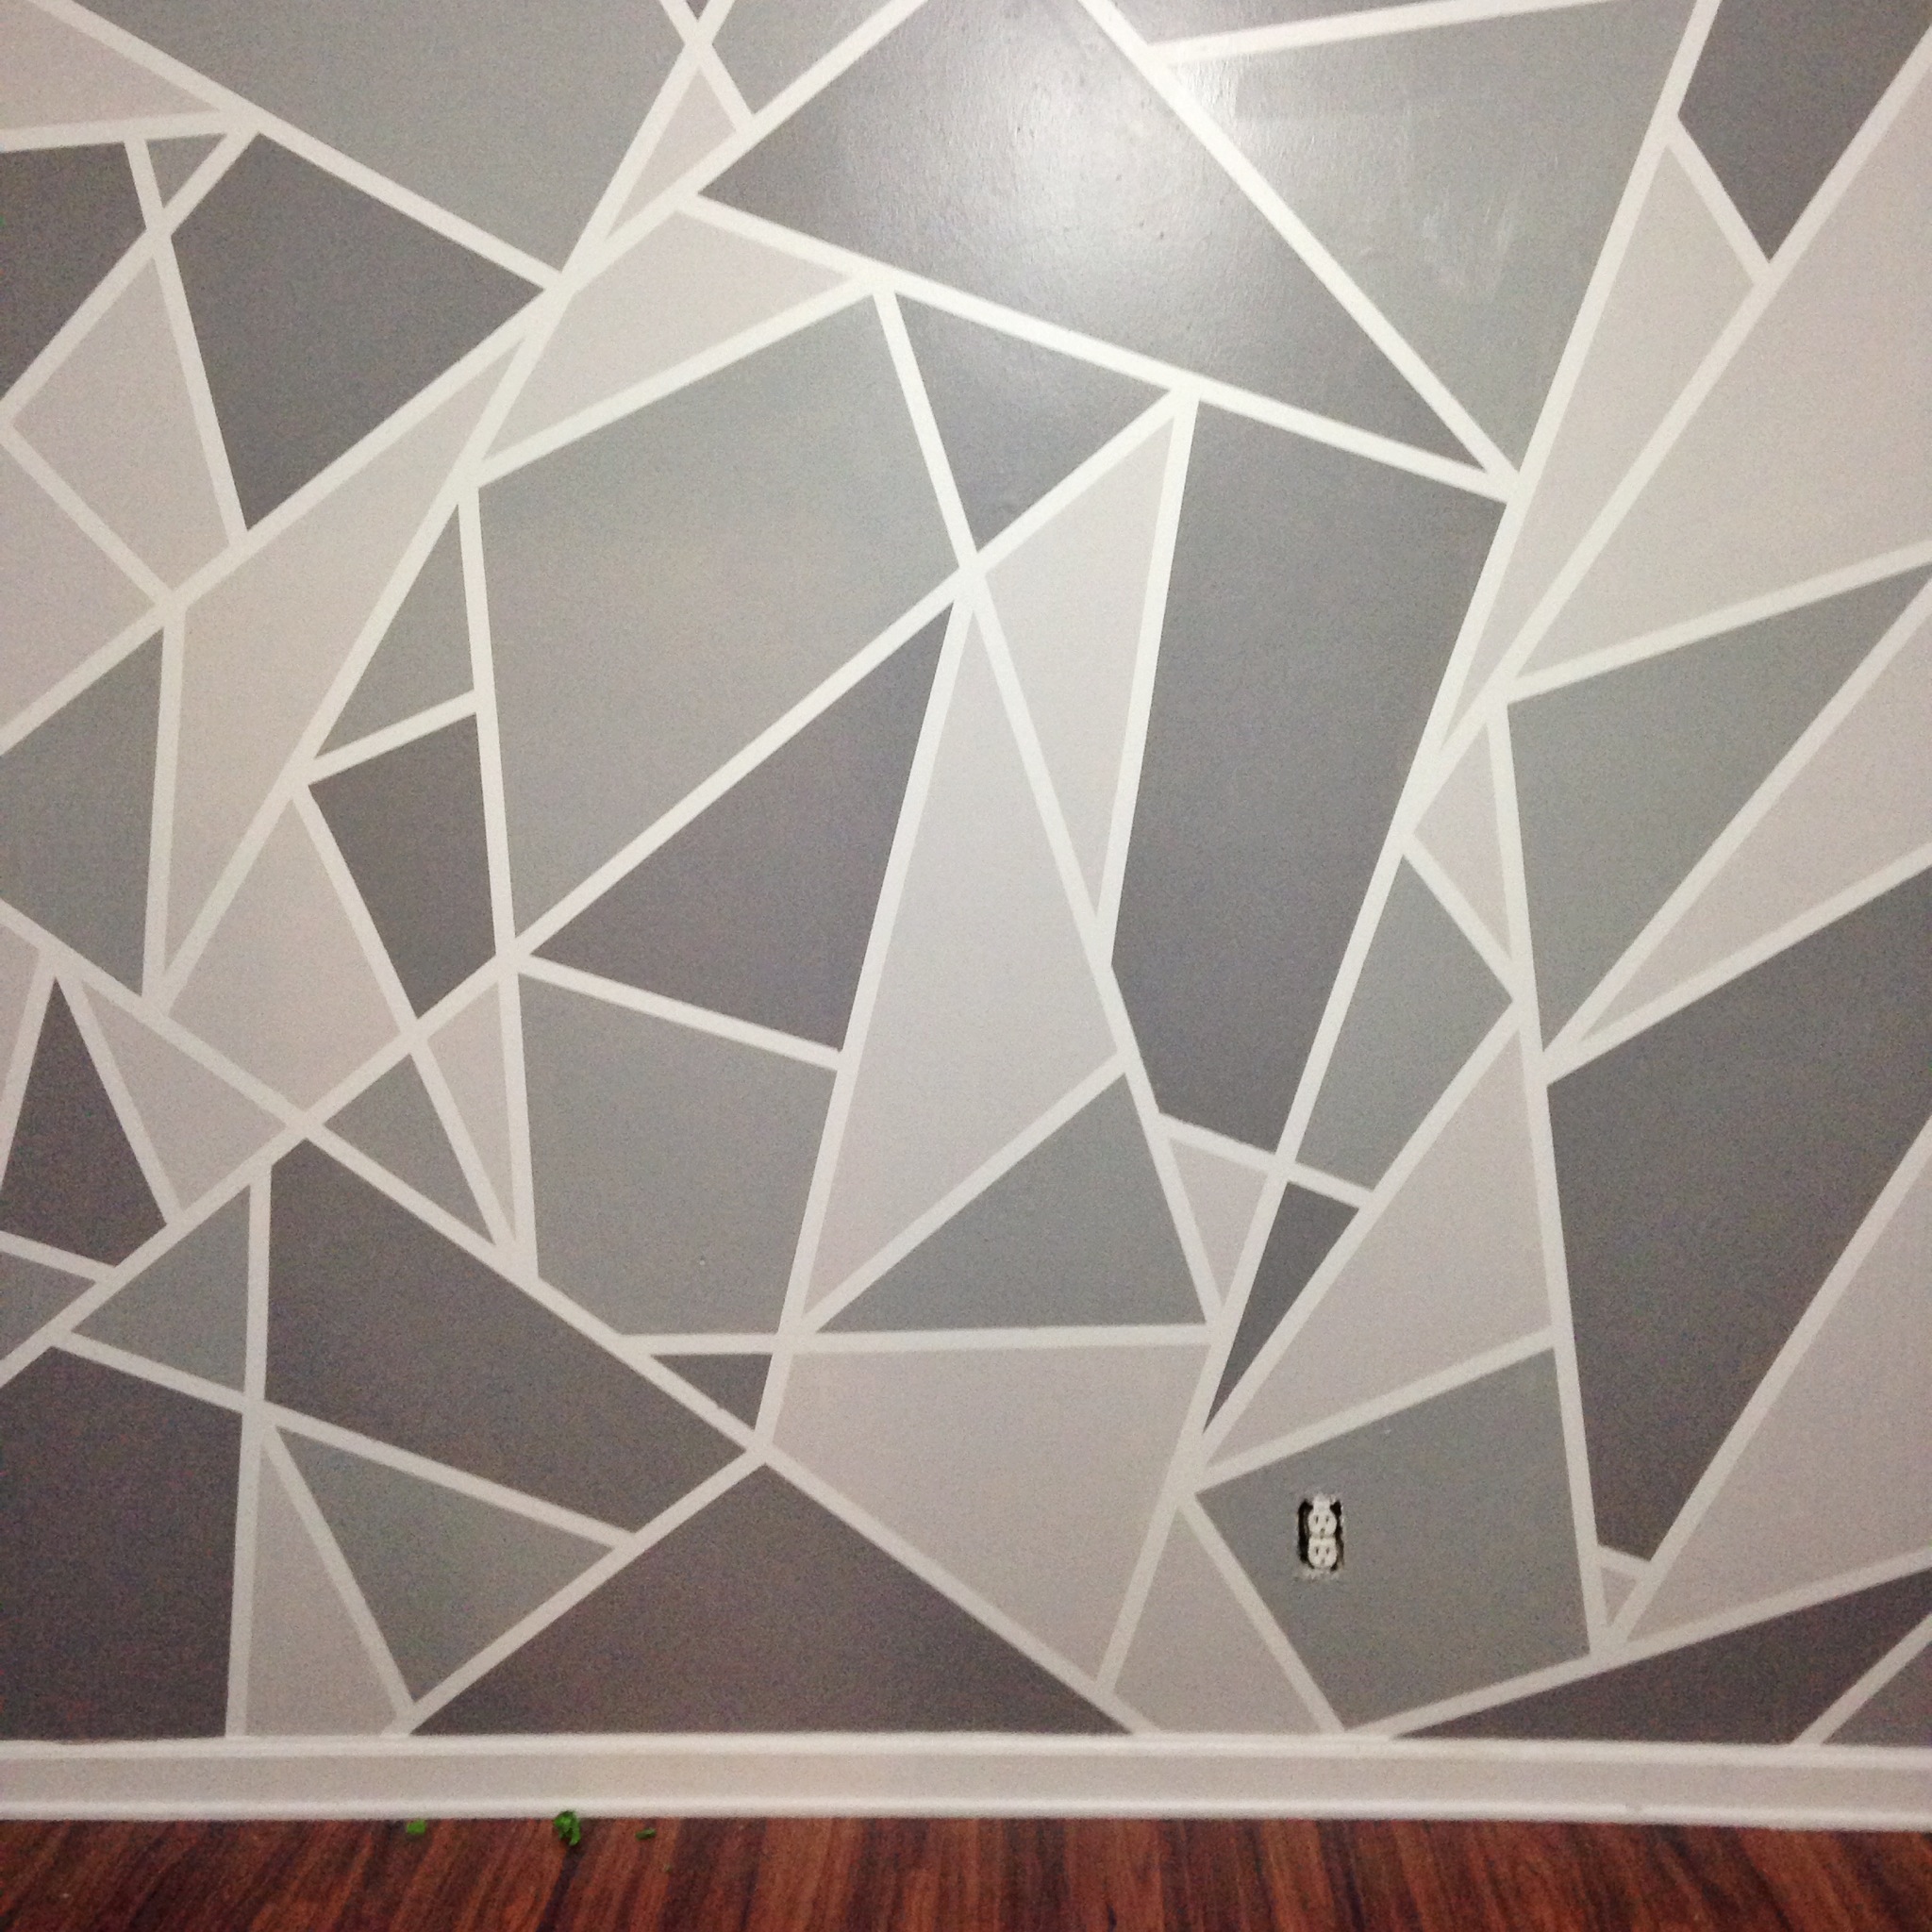 Faux Wallpaper Diys - Frog Tape Grey And White - HD Wallpaper 